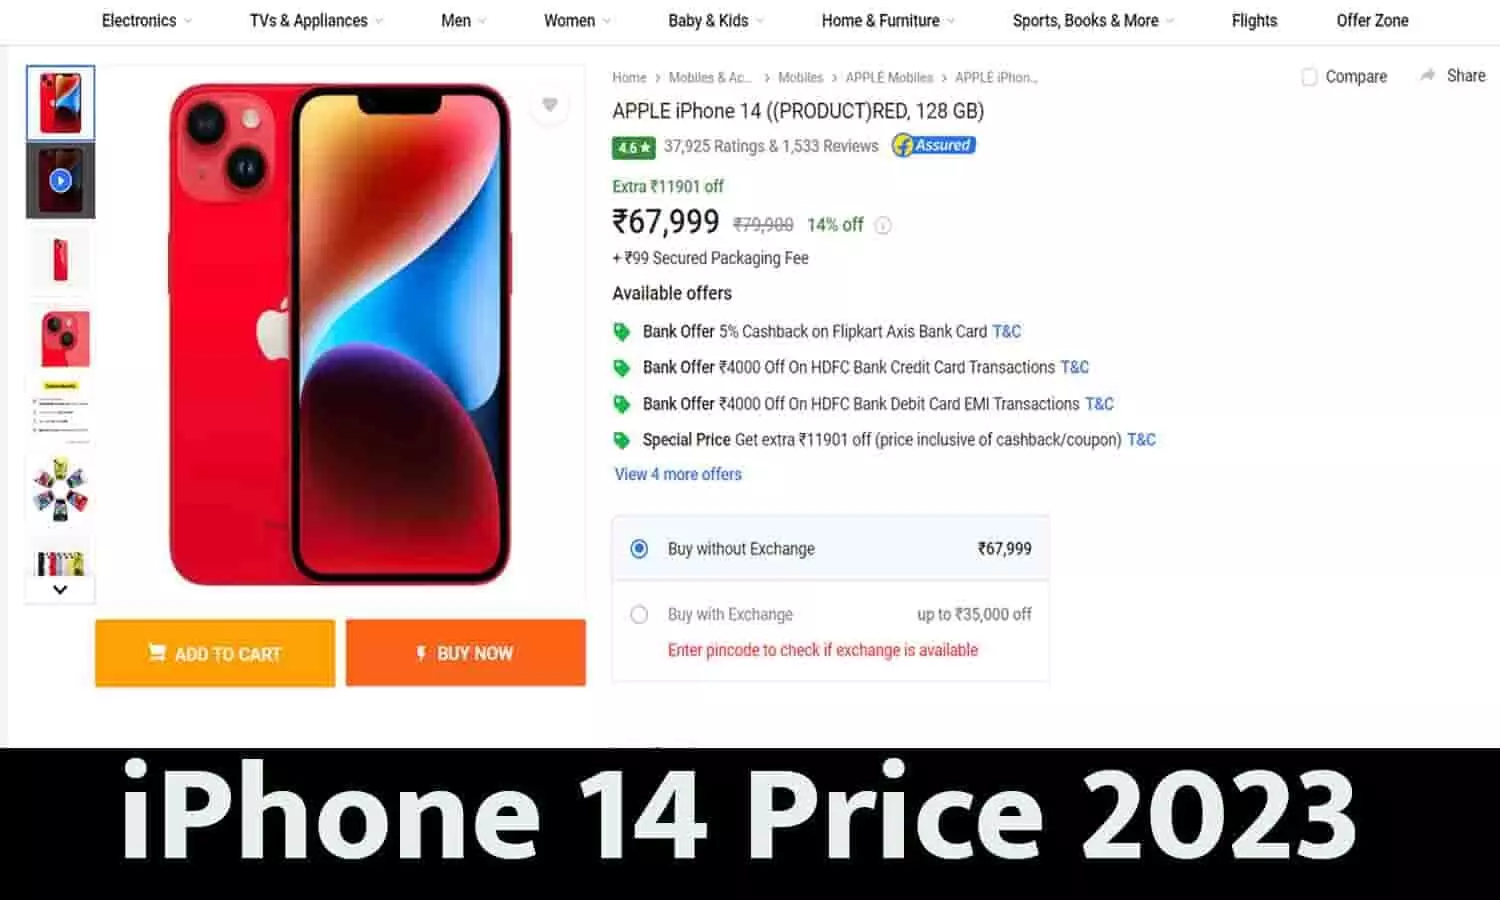 iPhone 14 Price 2023